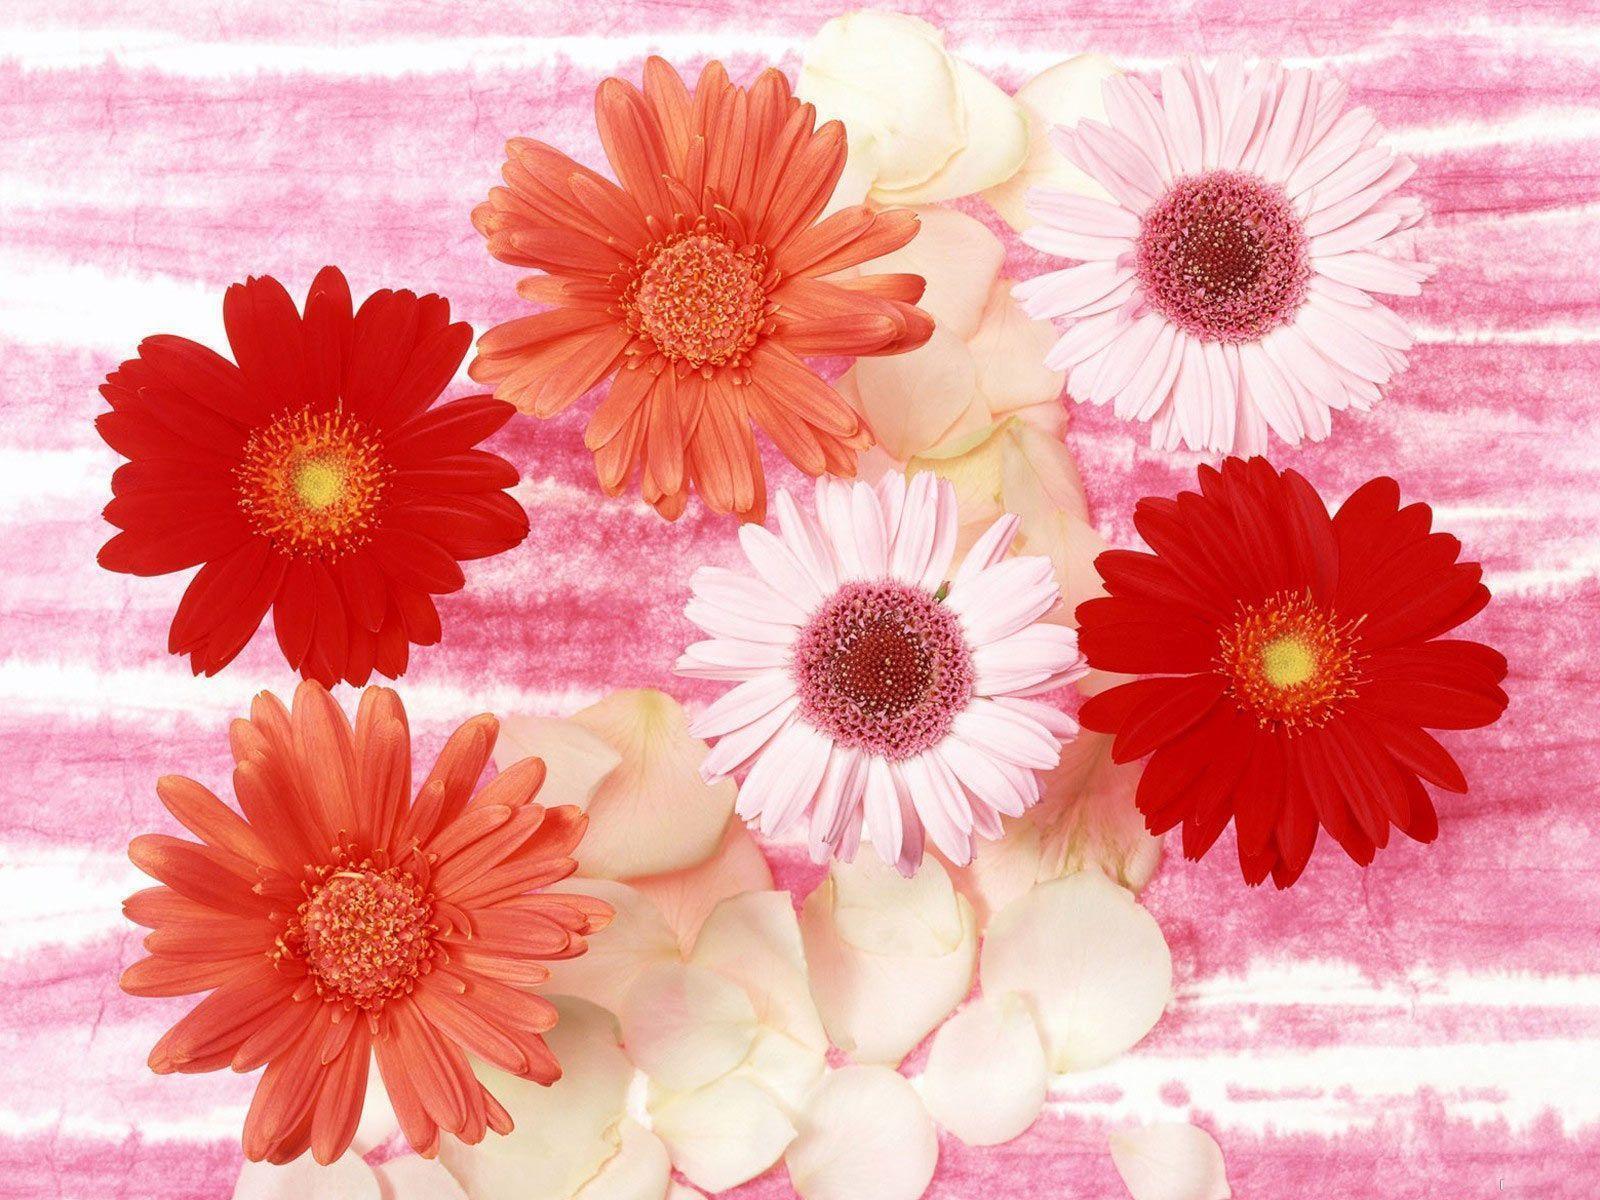 Desktop Background Flowers Wallpaper 1920x1200PX Wallpaper Free